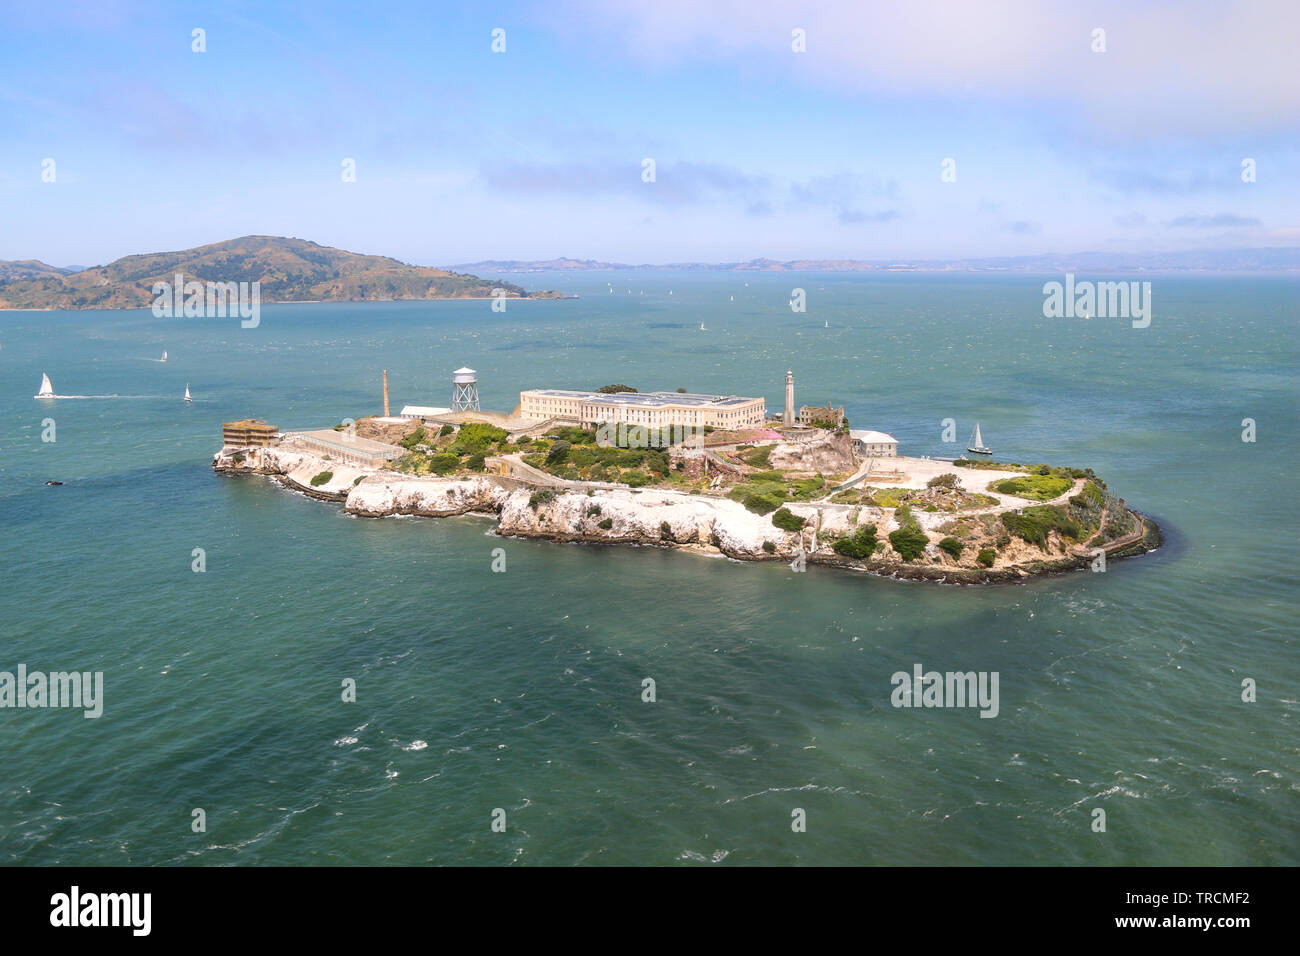 Aerial view of Alcatraz, San Francisco Bay, California Stock Photo